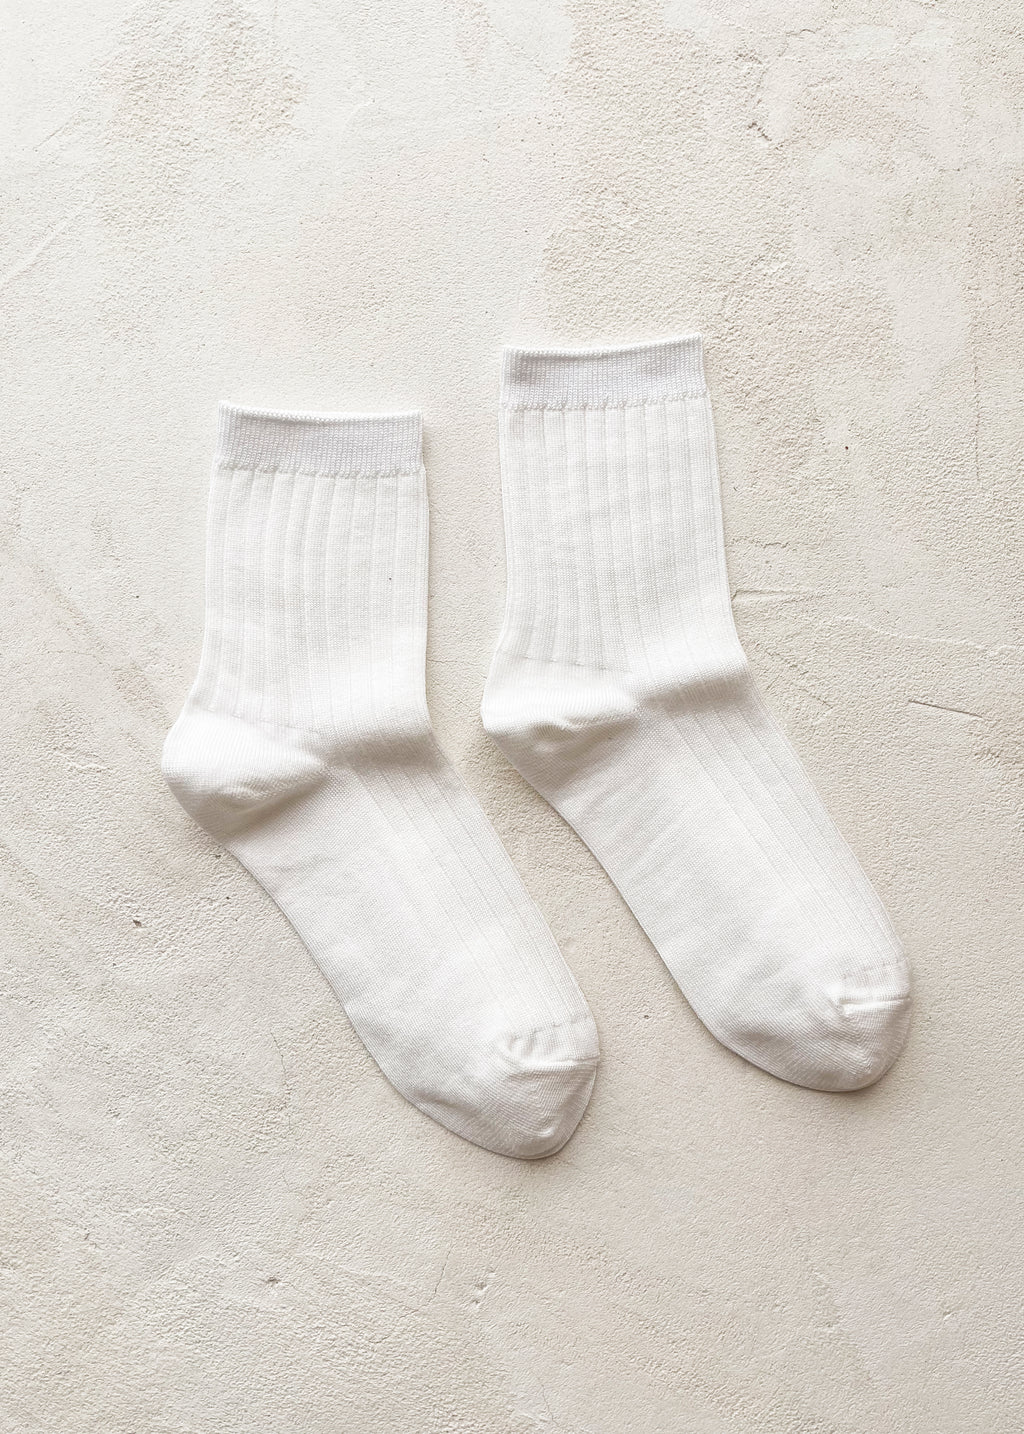 Her Socks | Classic White